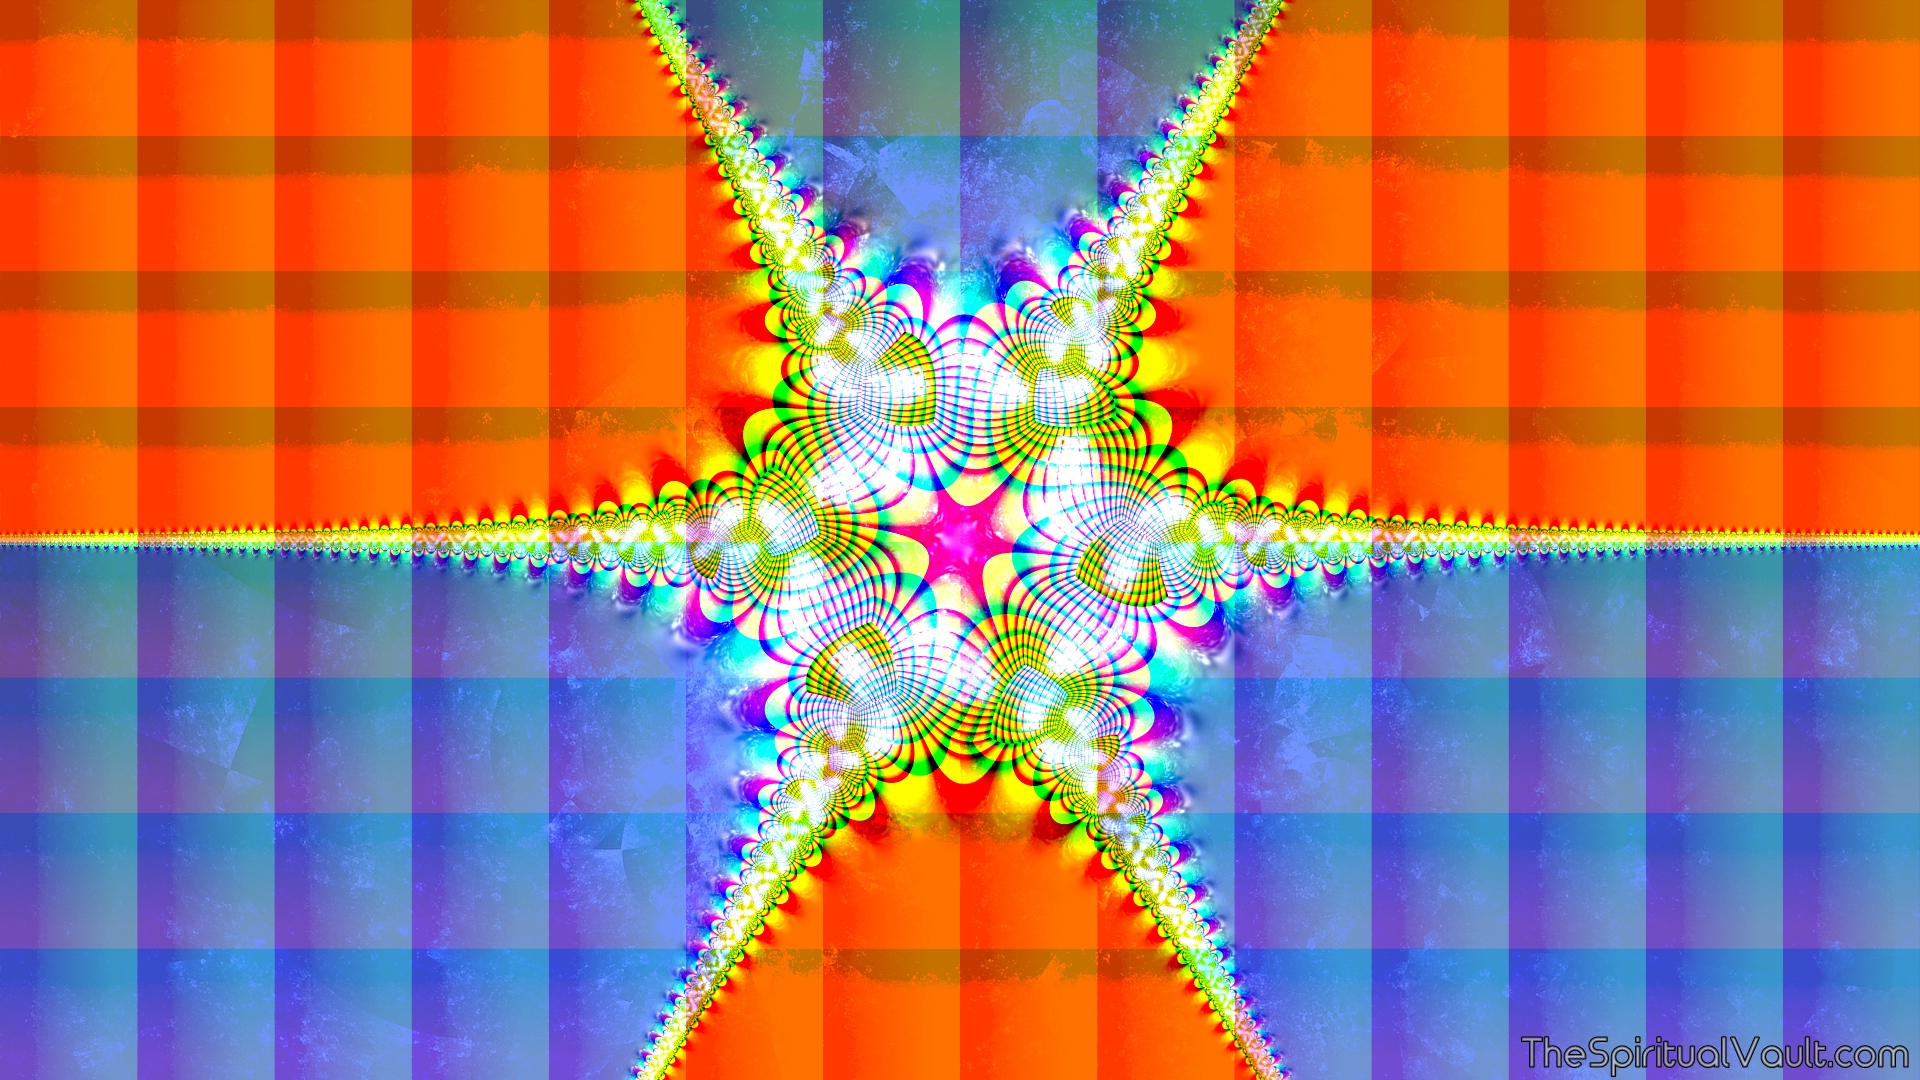 General 1920x1080 fractal kaleidoscope abstract colorful watermarked digital art